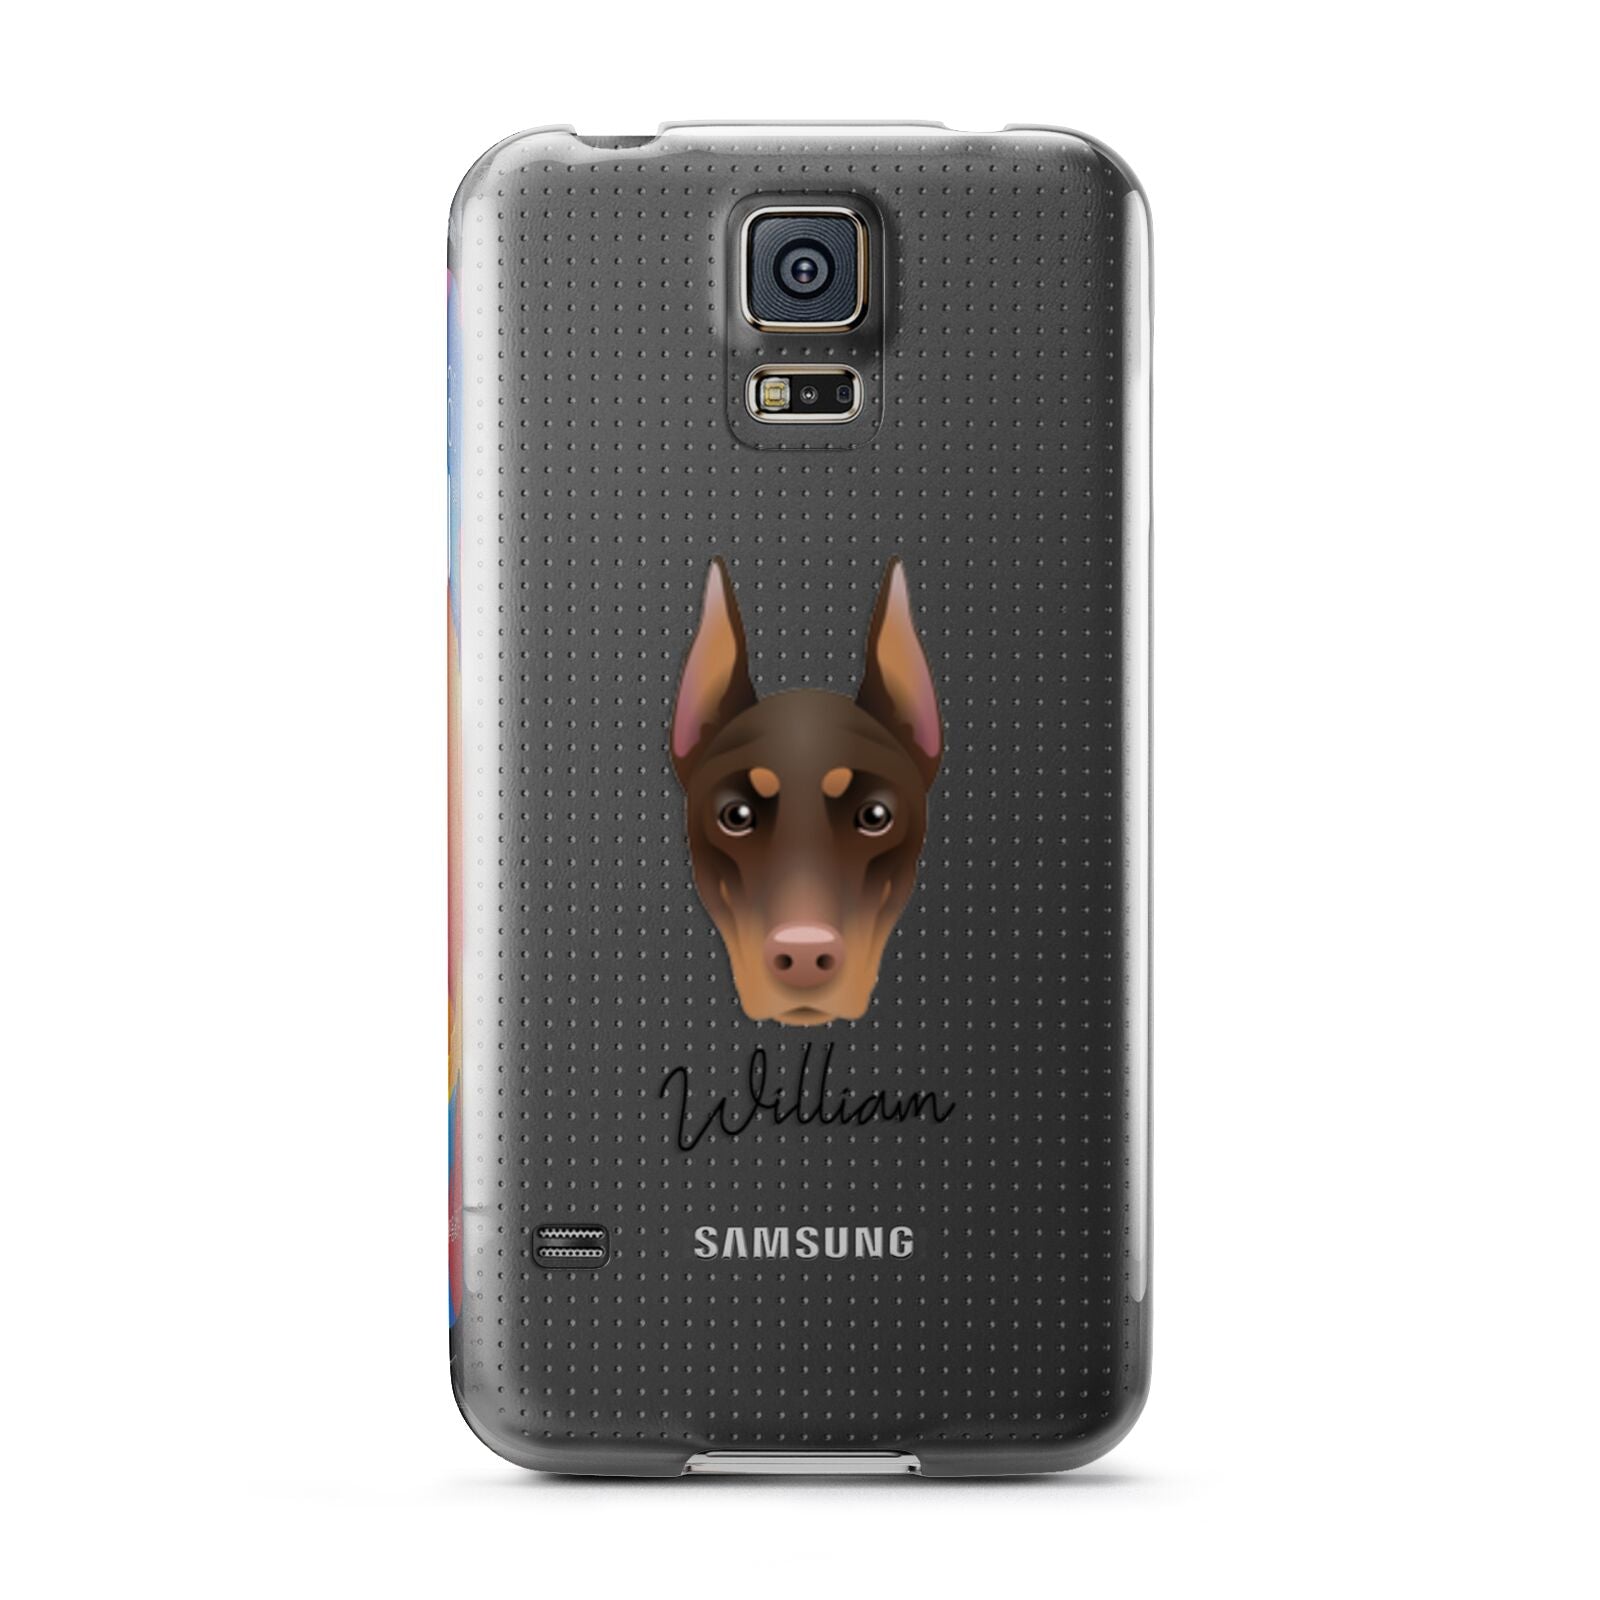 Dobermann Personalised Samsung Galaxy S5 Case